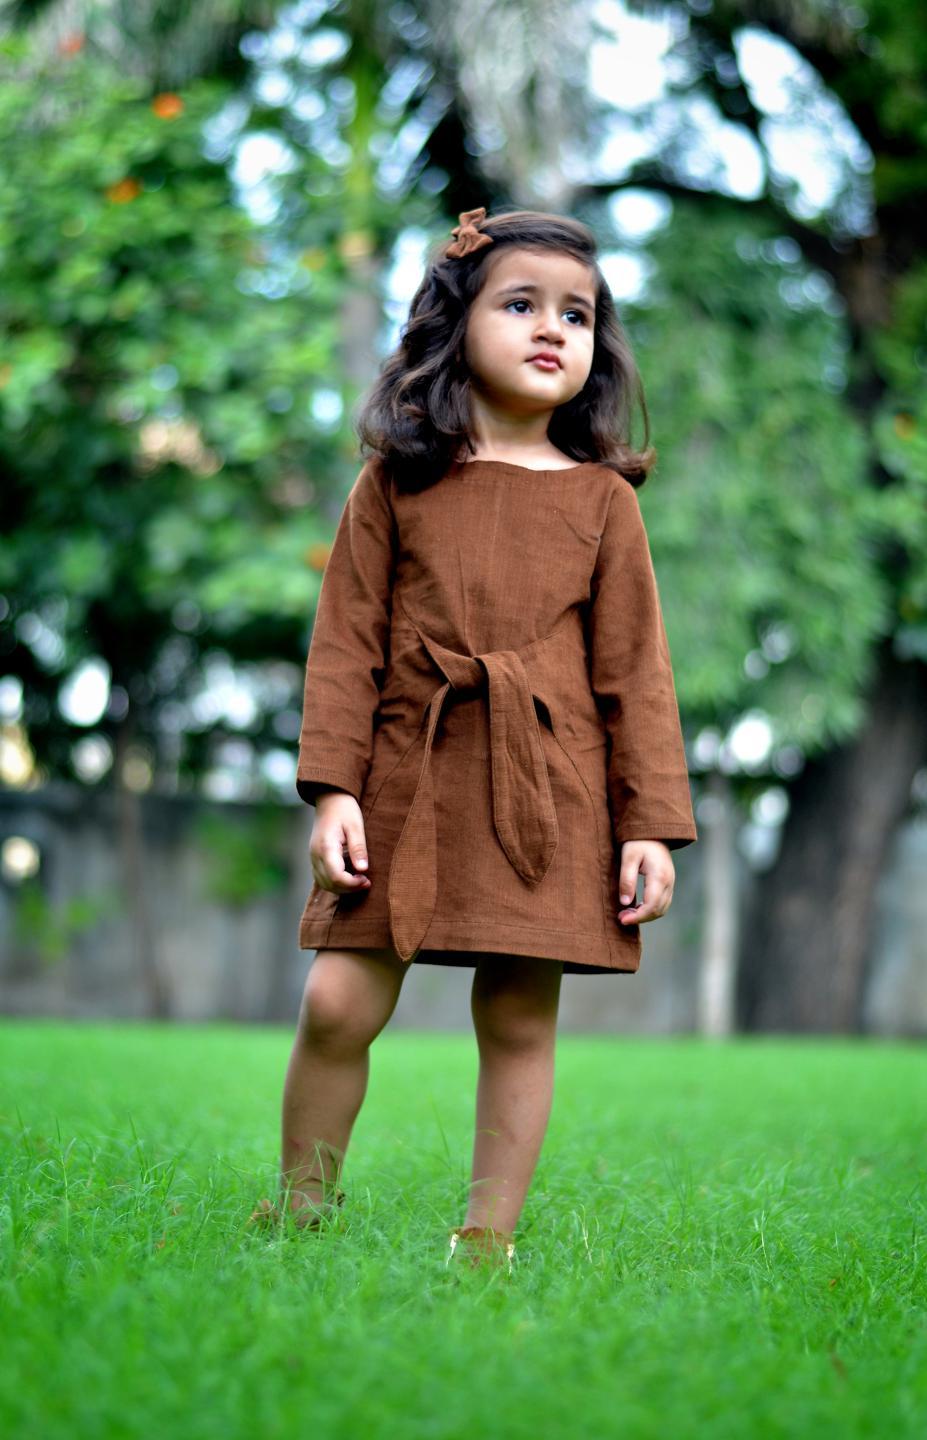 stylish-brown-dress-10510020BR, Kids Clothing, Corduroy Girl Dress